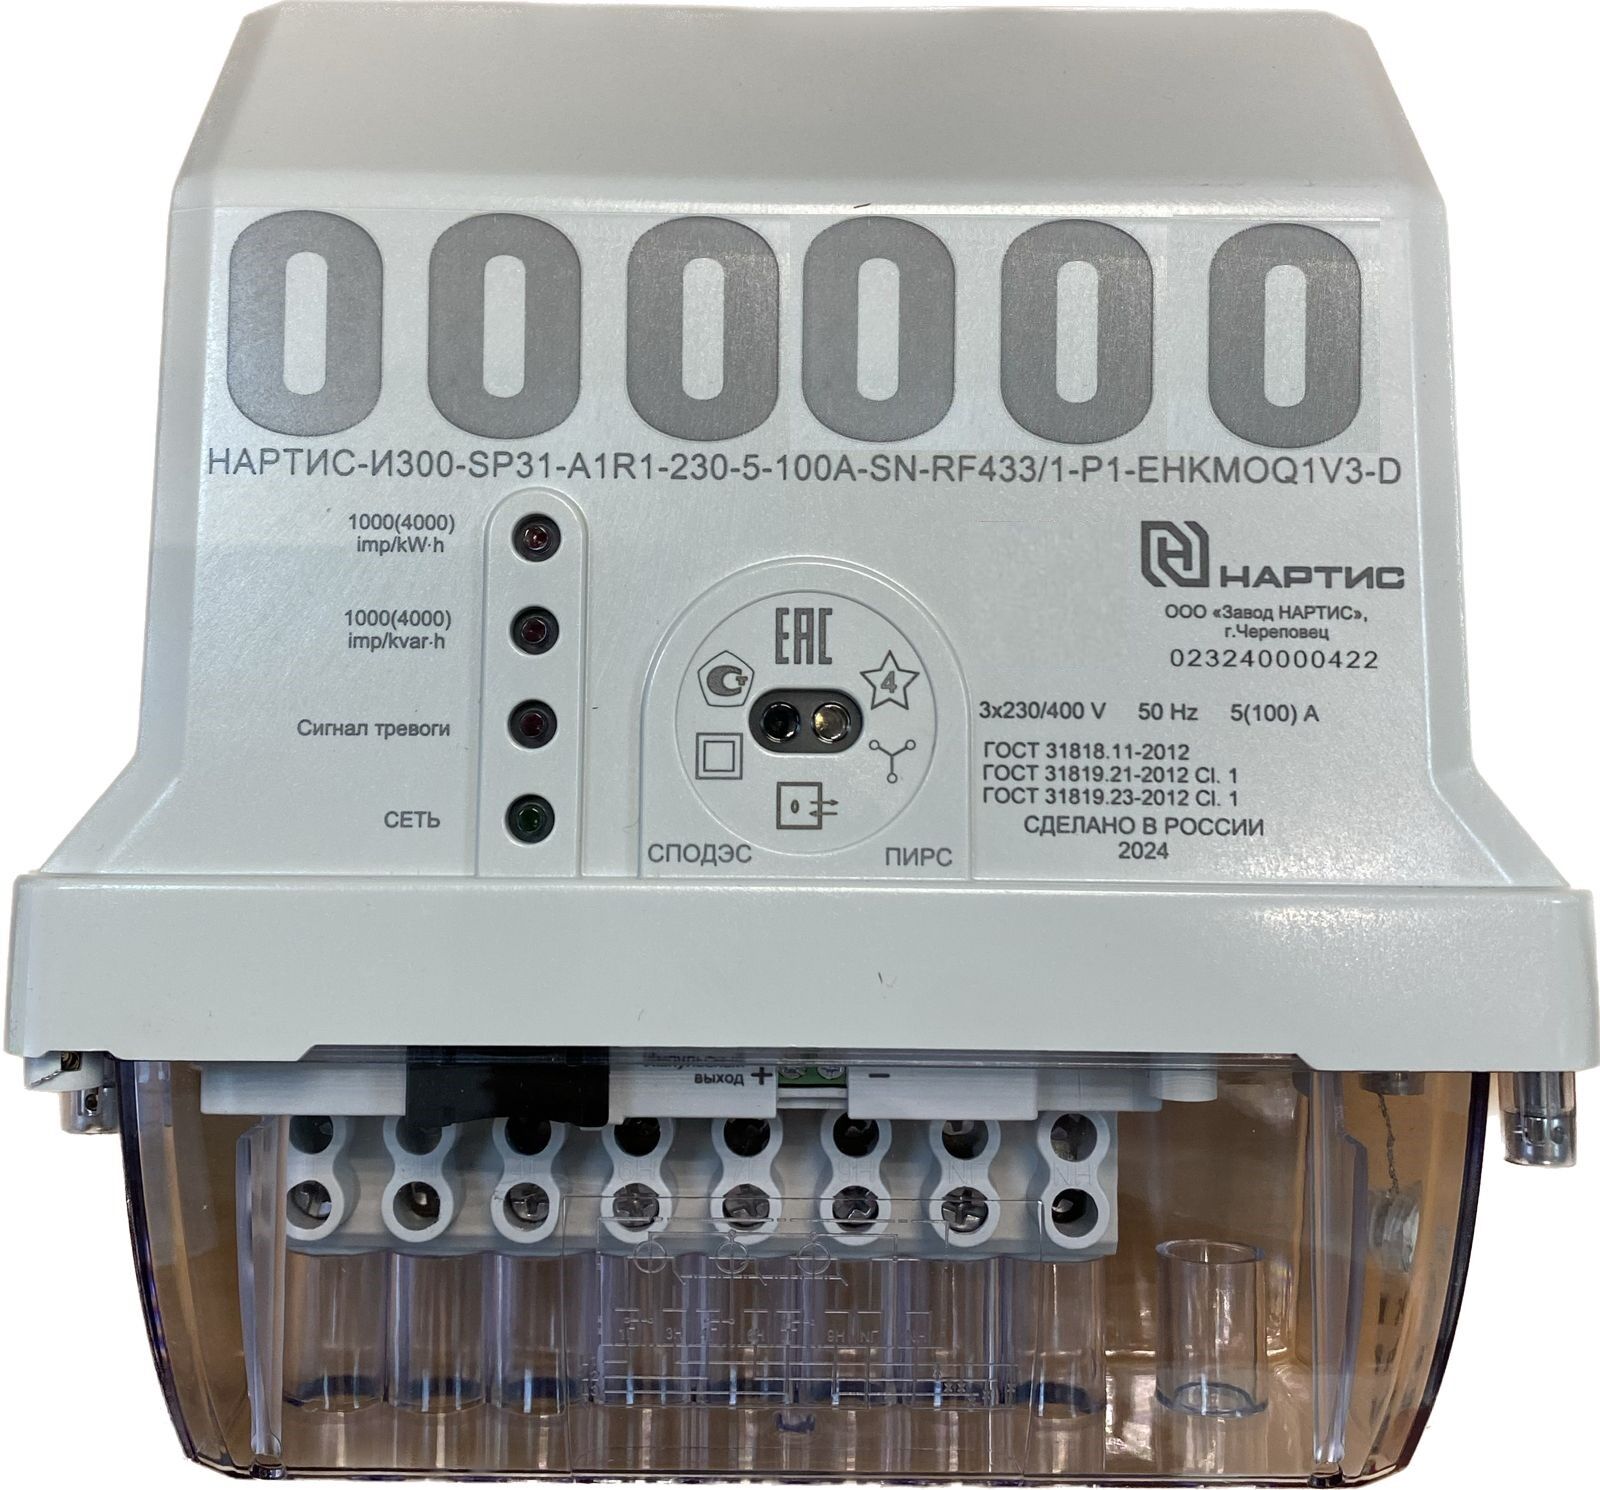 Счетчик электроэнергии НАРТИС-И300-SP31-A1R1-230-5-100A-SN-RF433/1-P1-EHKMOQ1V3-D